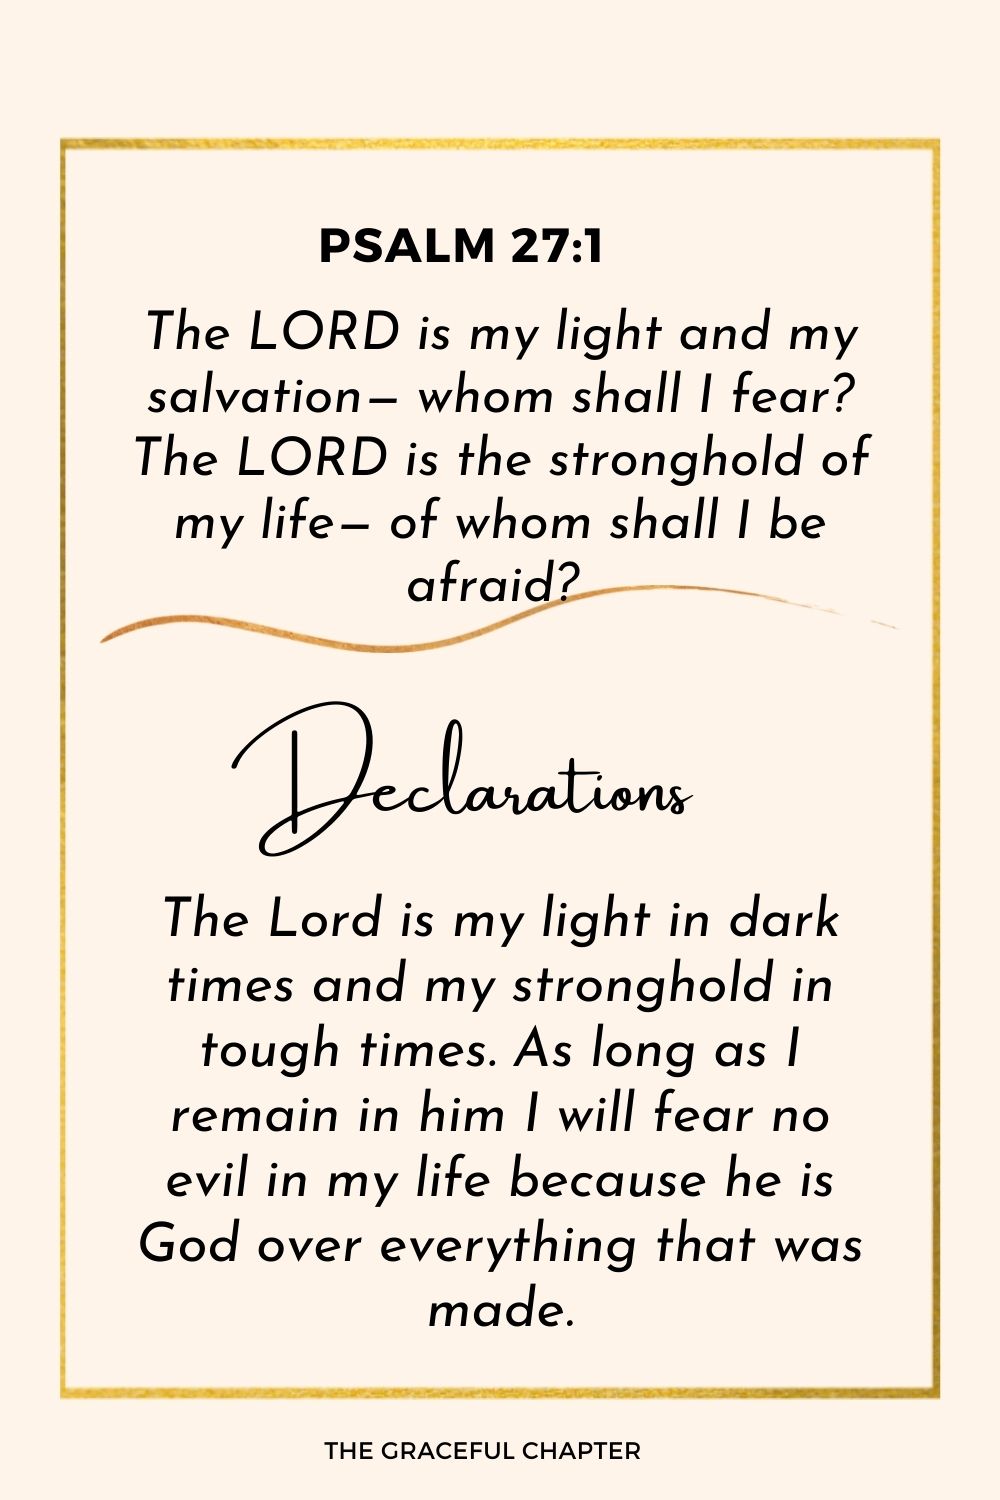 Psalm 27:1 declaration